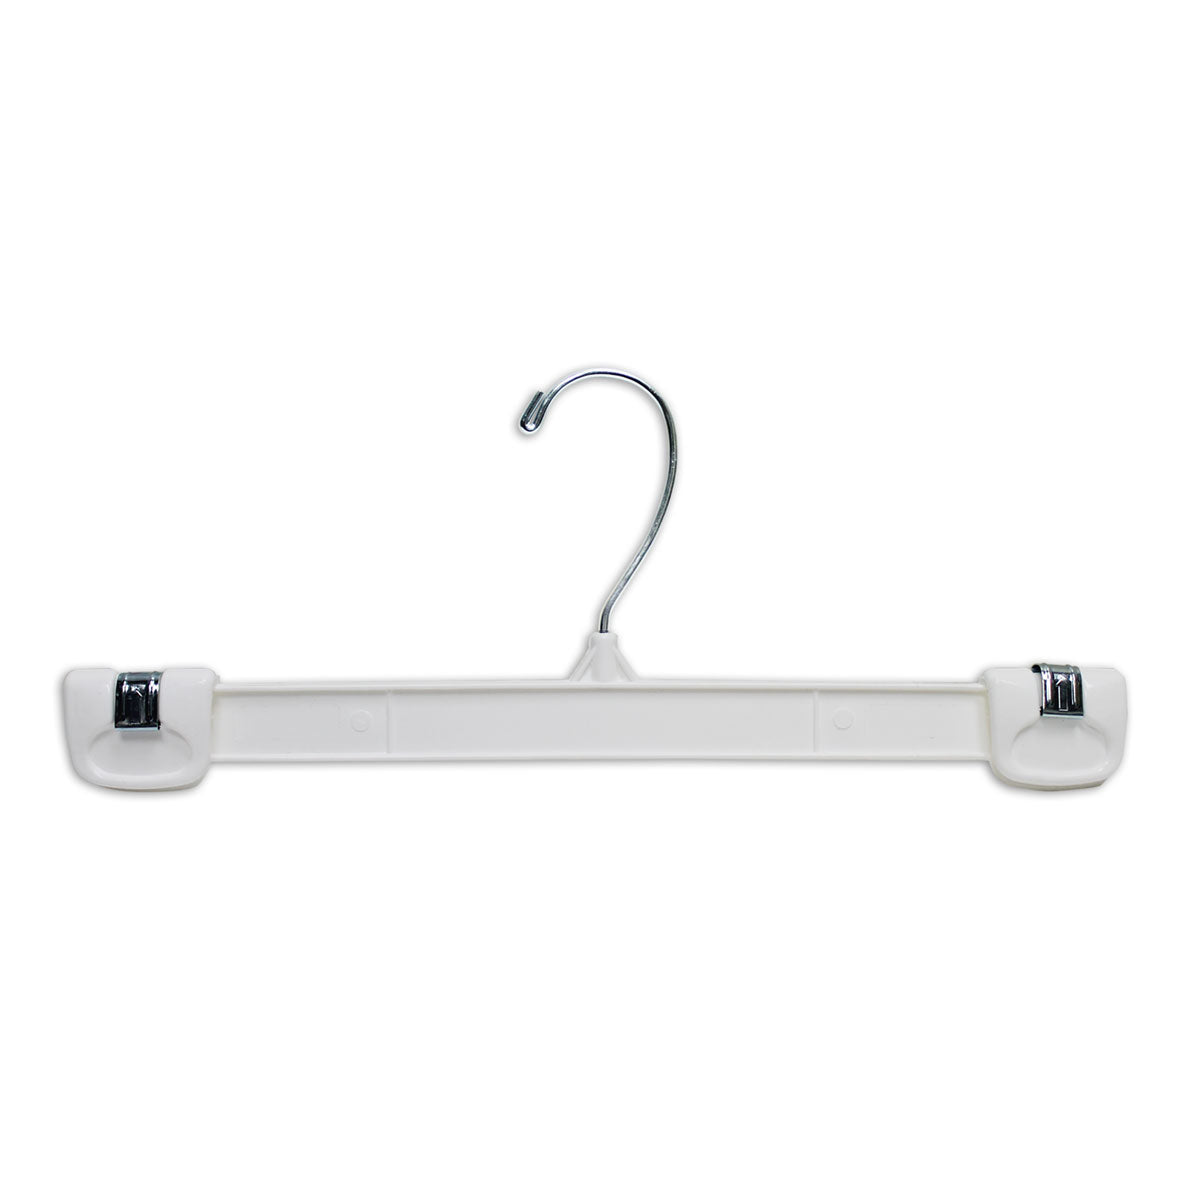 12" Pant Hangers - slide lock clips